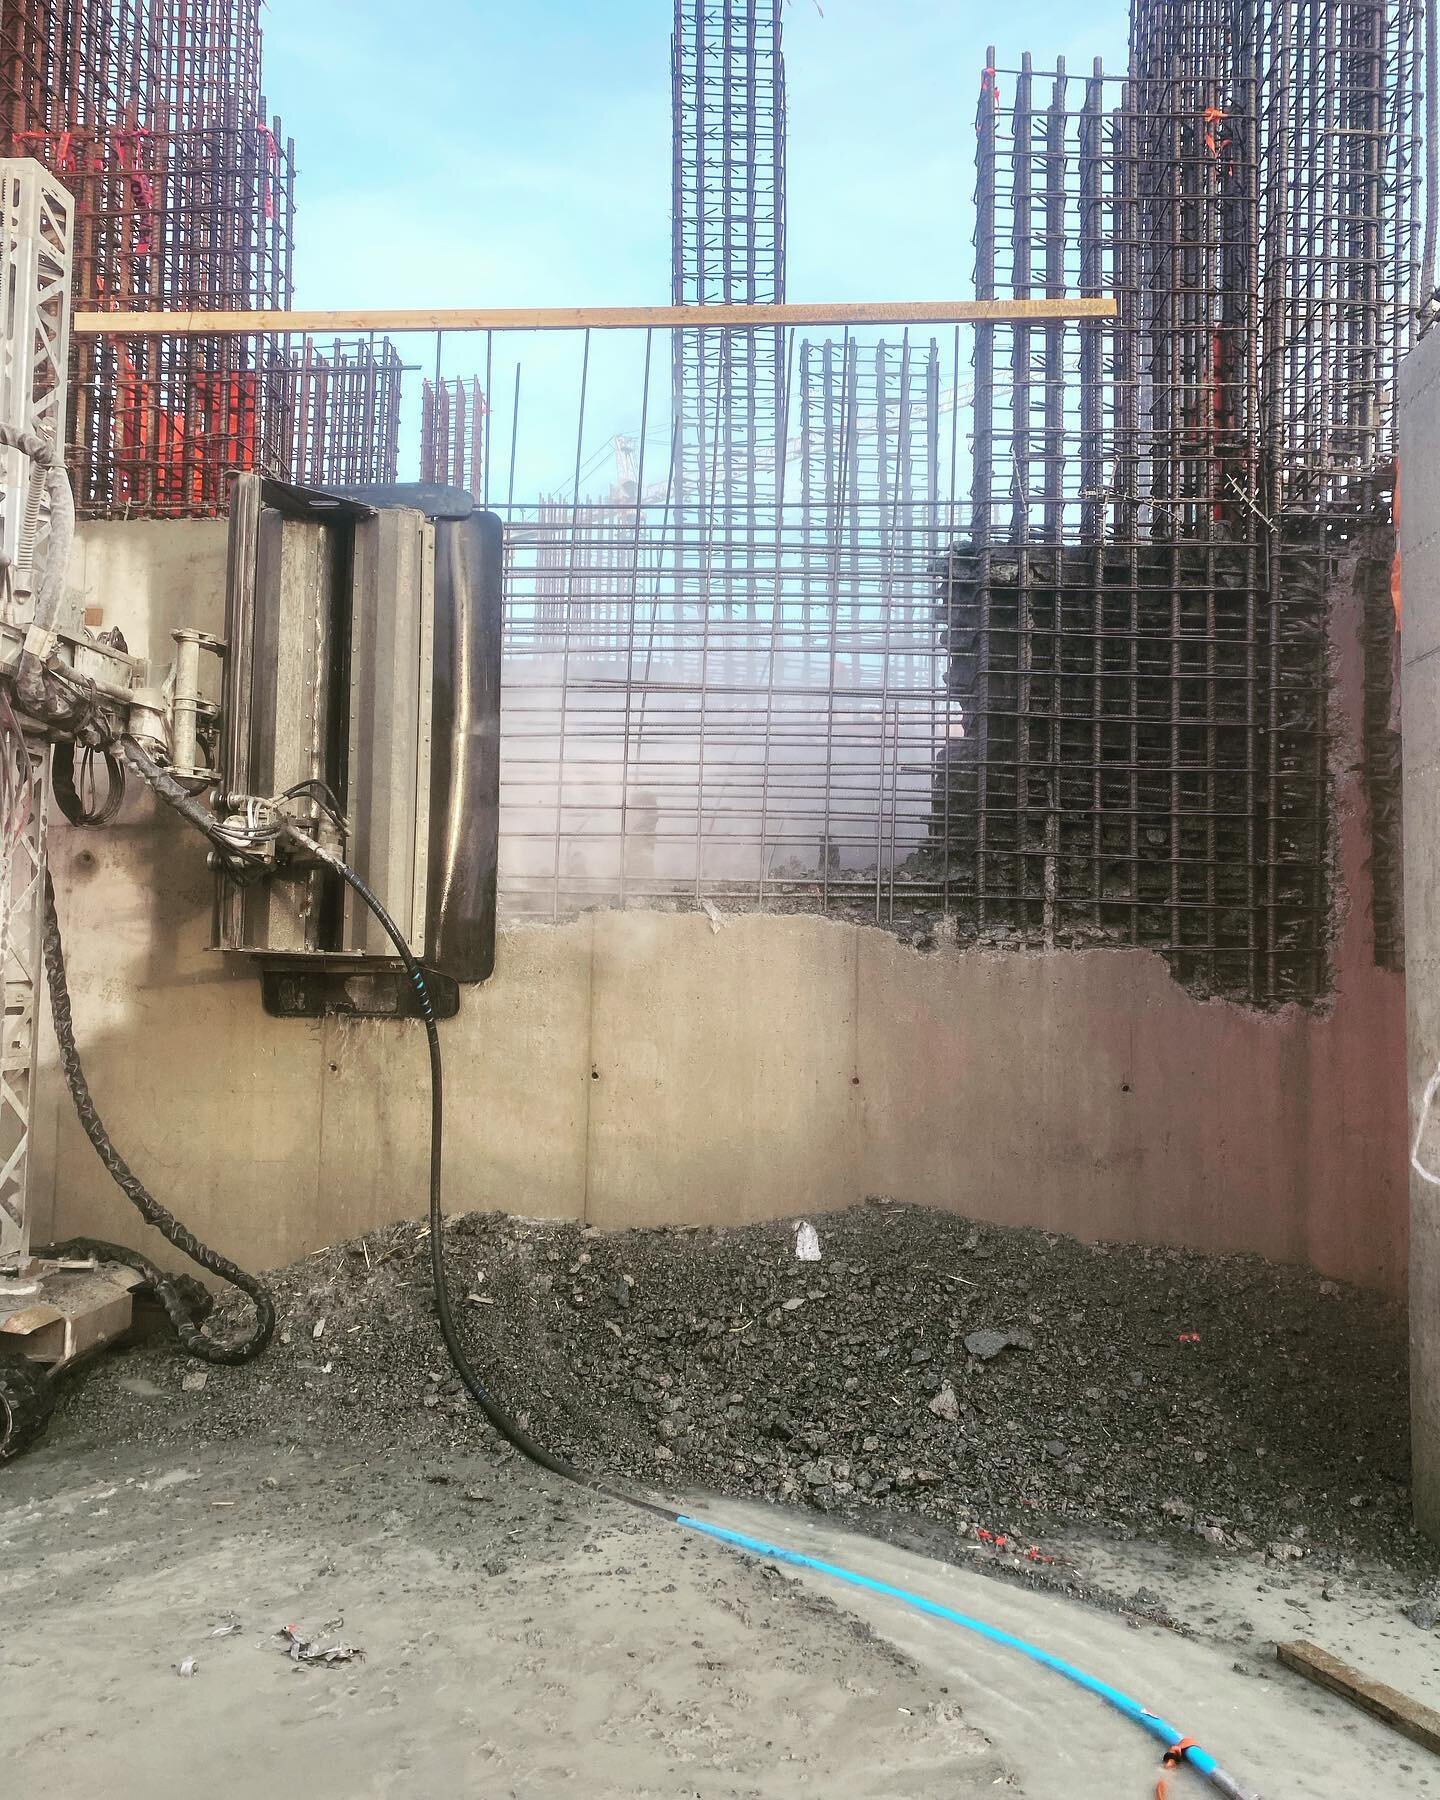 Taking care of business #hydrodemolition #concrete #demolition #whereswalco #highpressure #worksmart